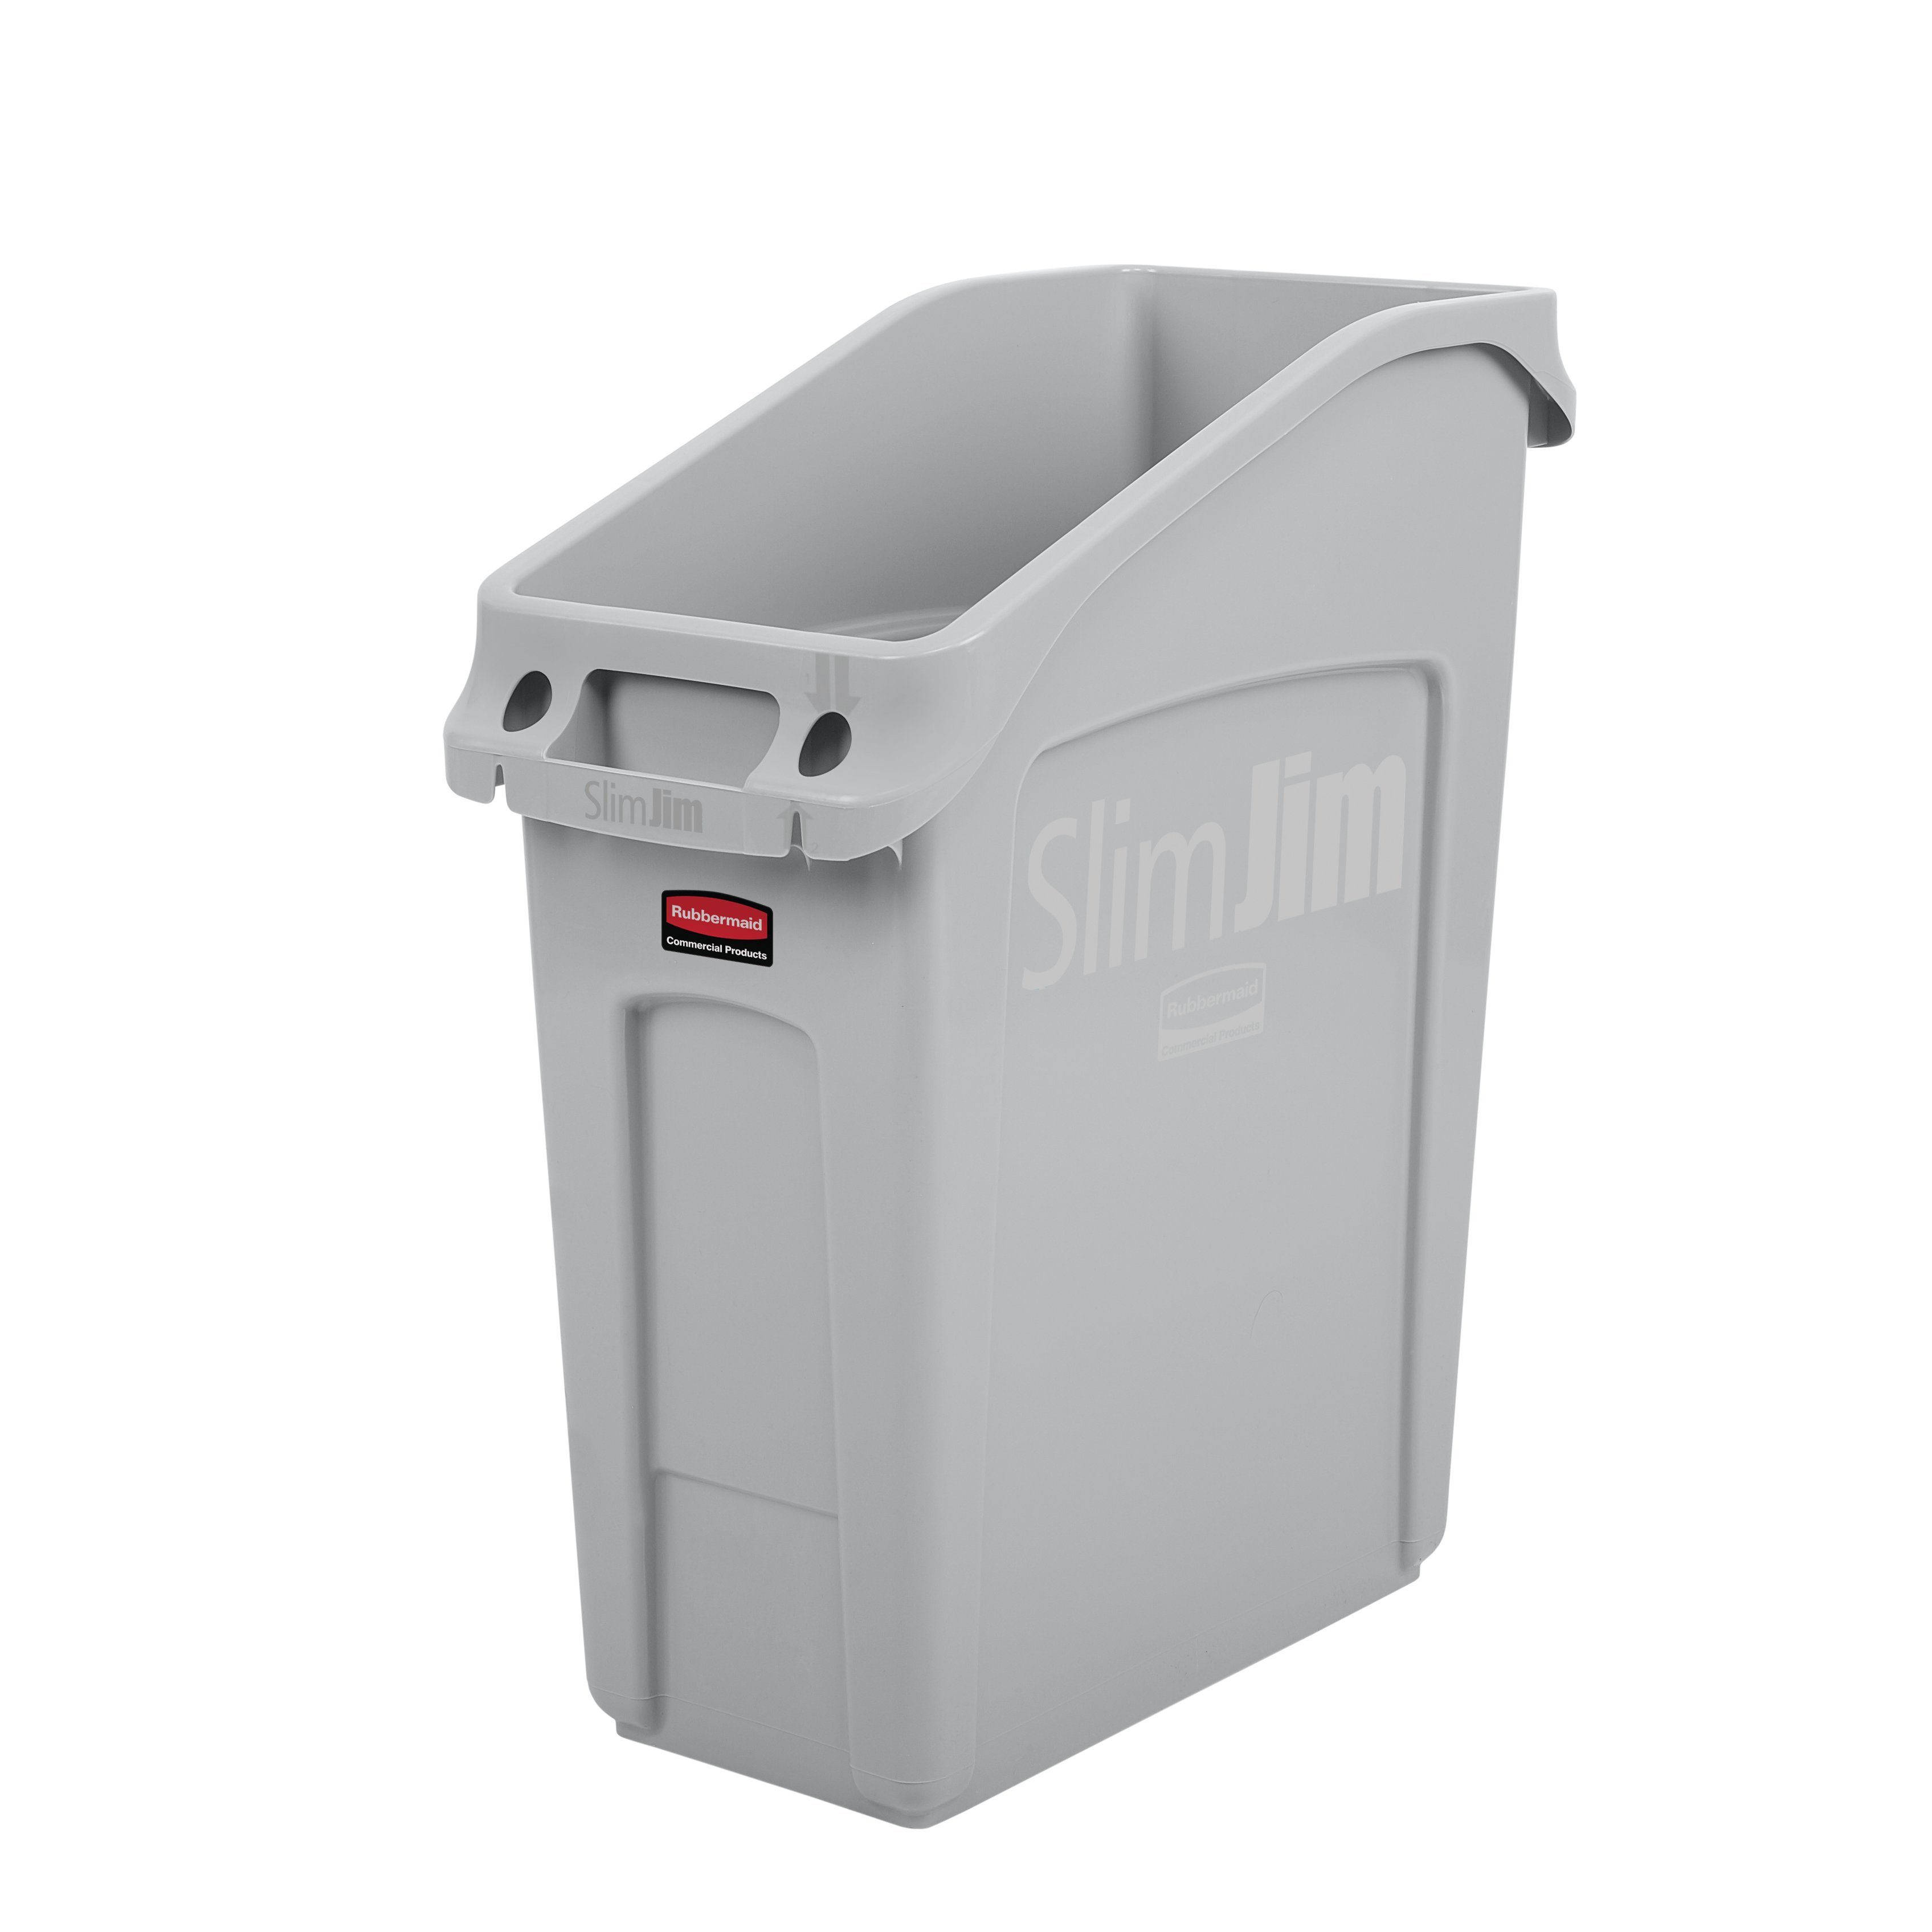 Rubbermaid Untertischbehälter grau 49 Jim® Slim l, Mülltrennsystem Rubbermaid